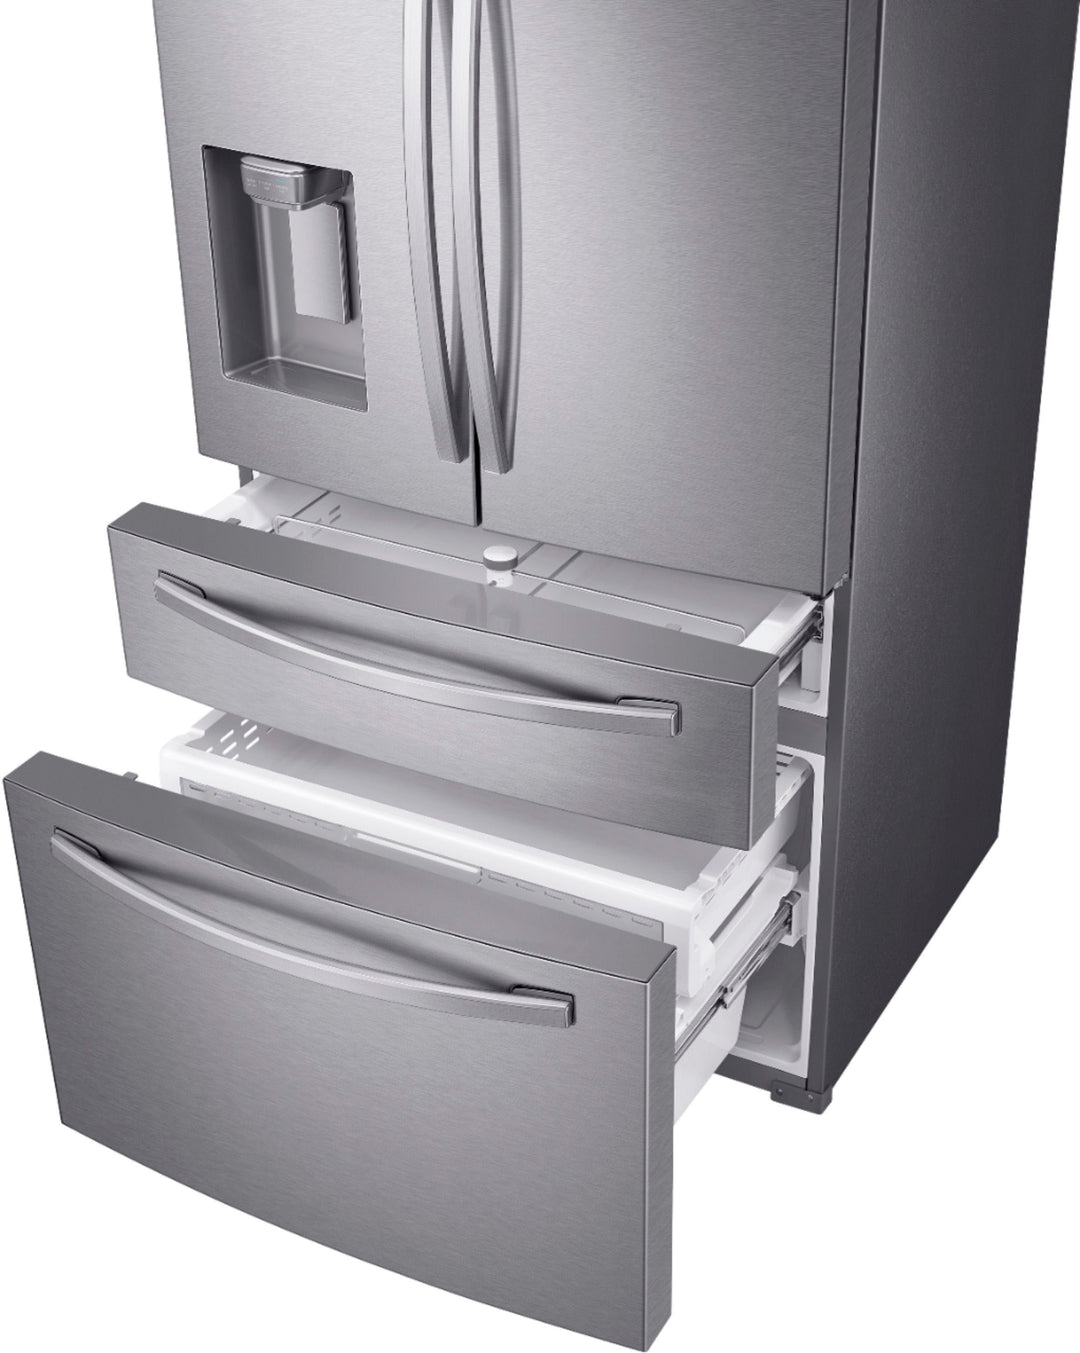 Samsung - OBX 22.6 cu. ft. 4-Door French Door Counter Depth Refrigerator with FlexZone Drawer - Stainless Steel_12